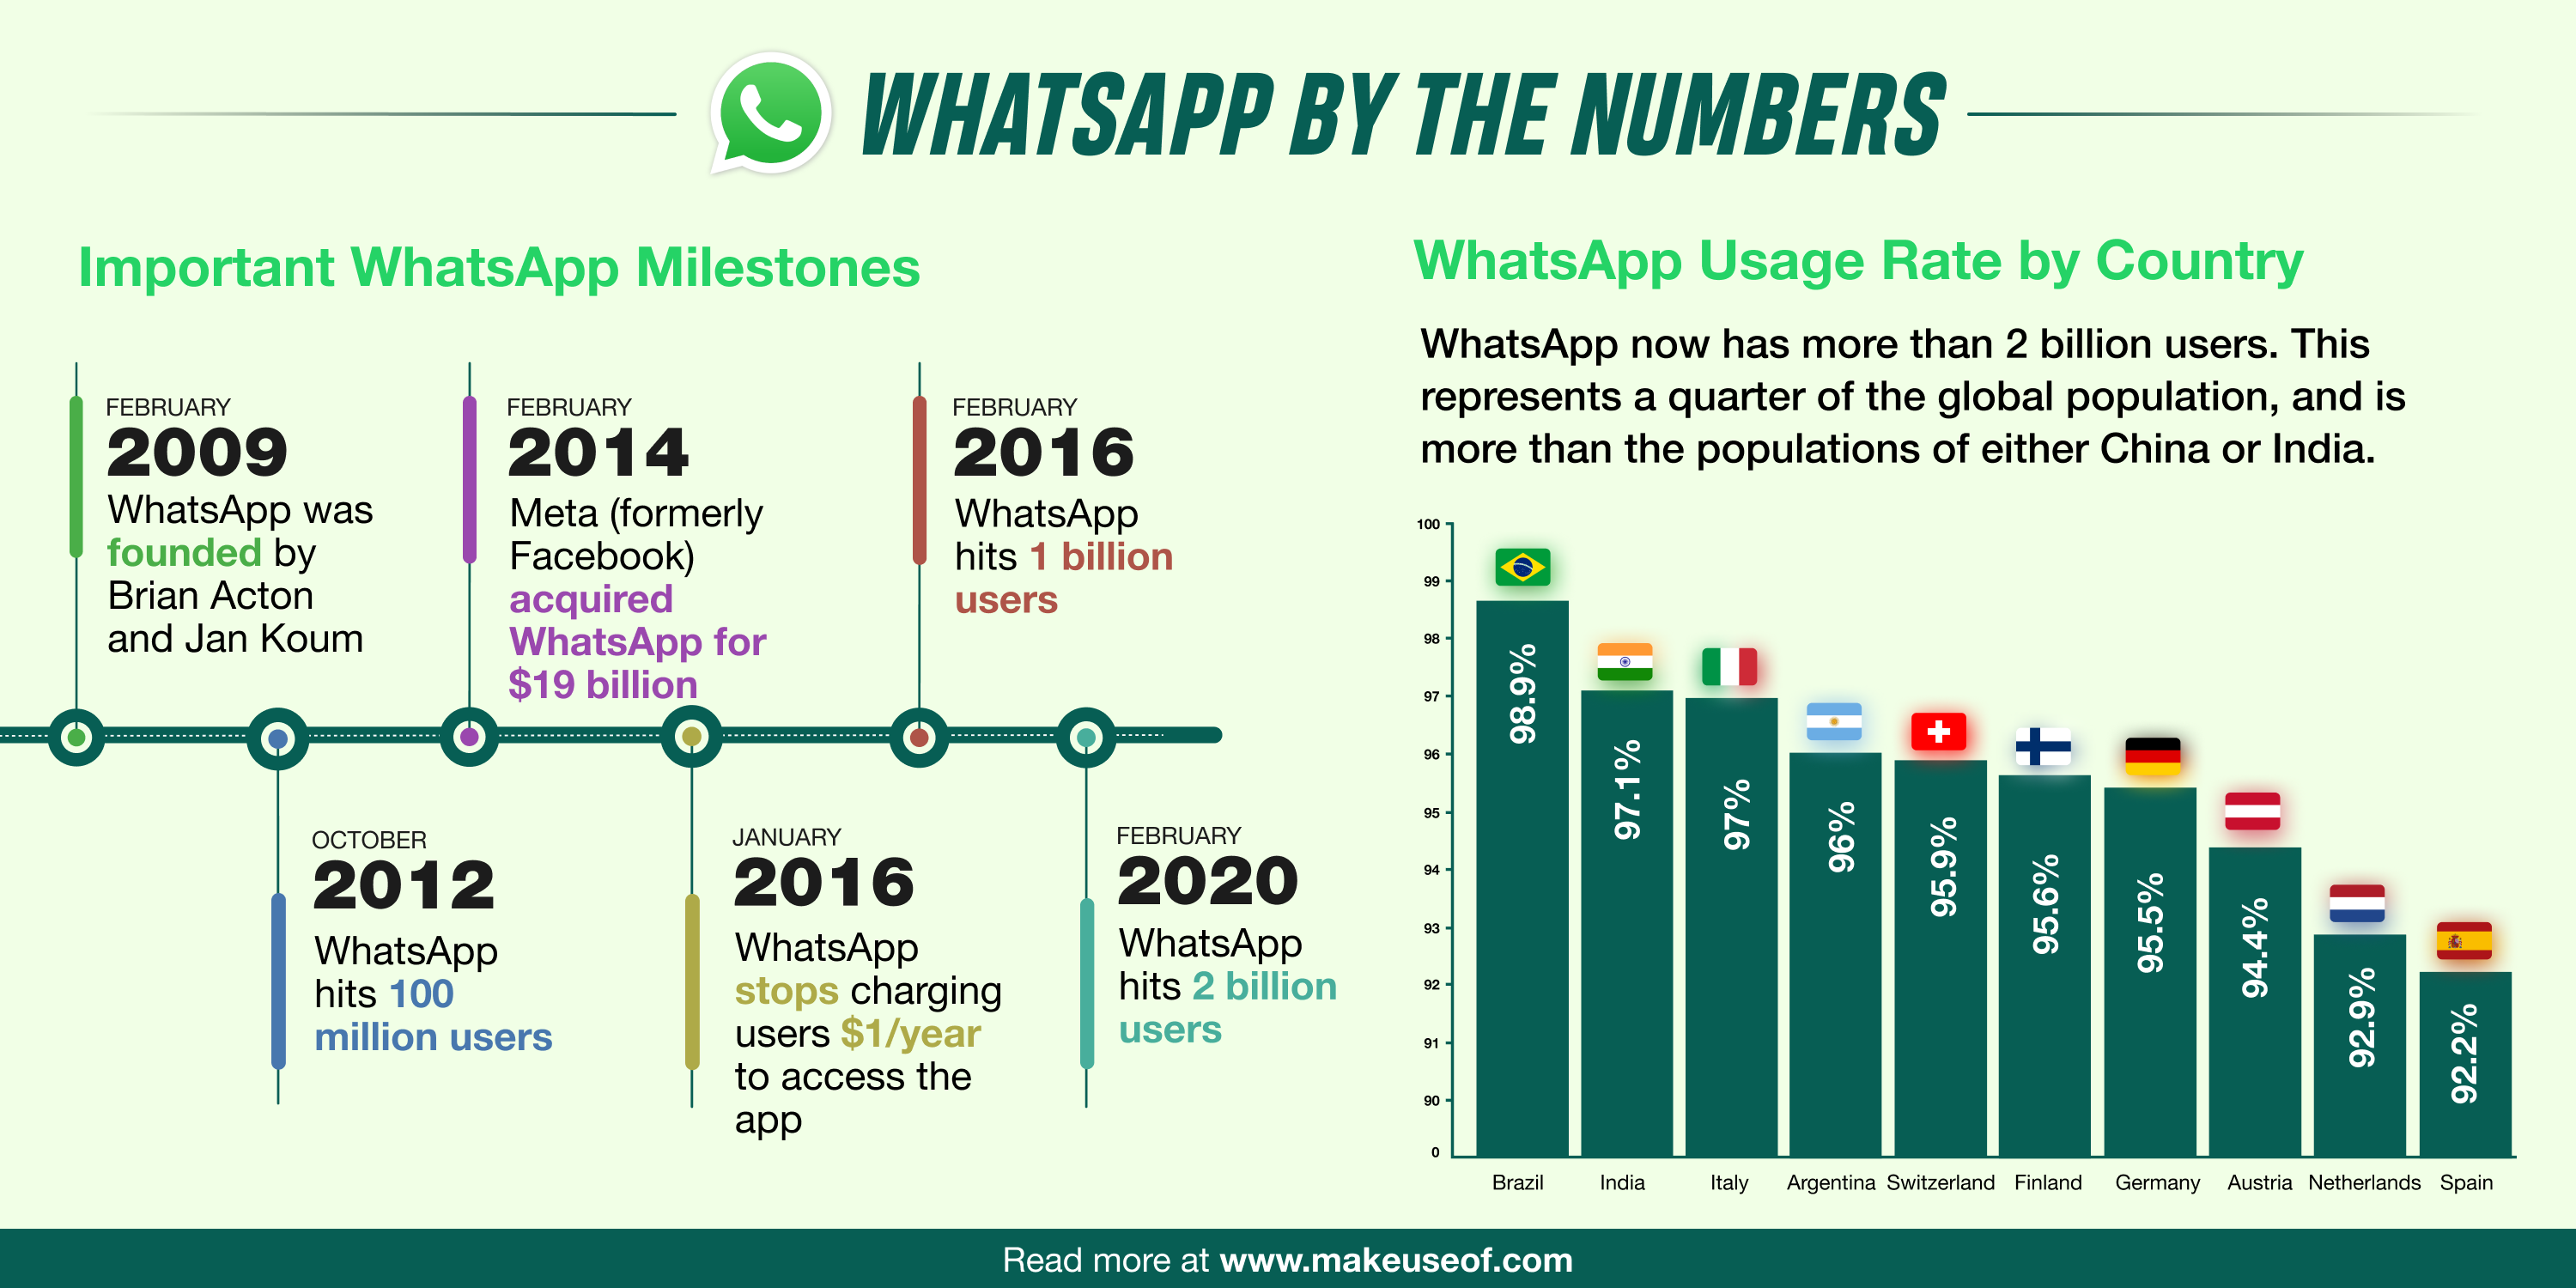 What do WhatsApp check marks mean?